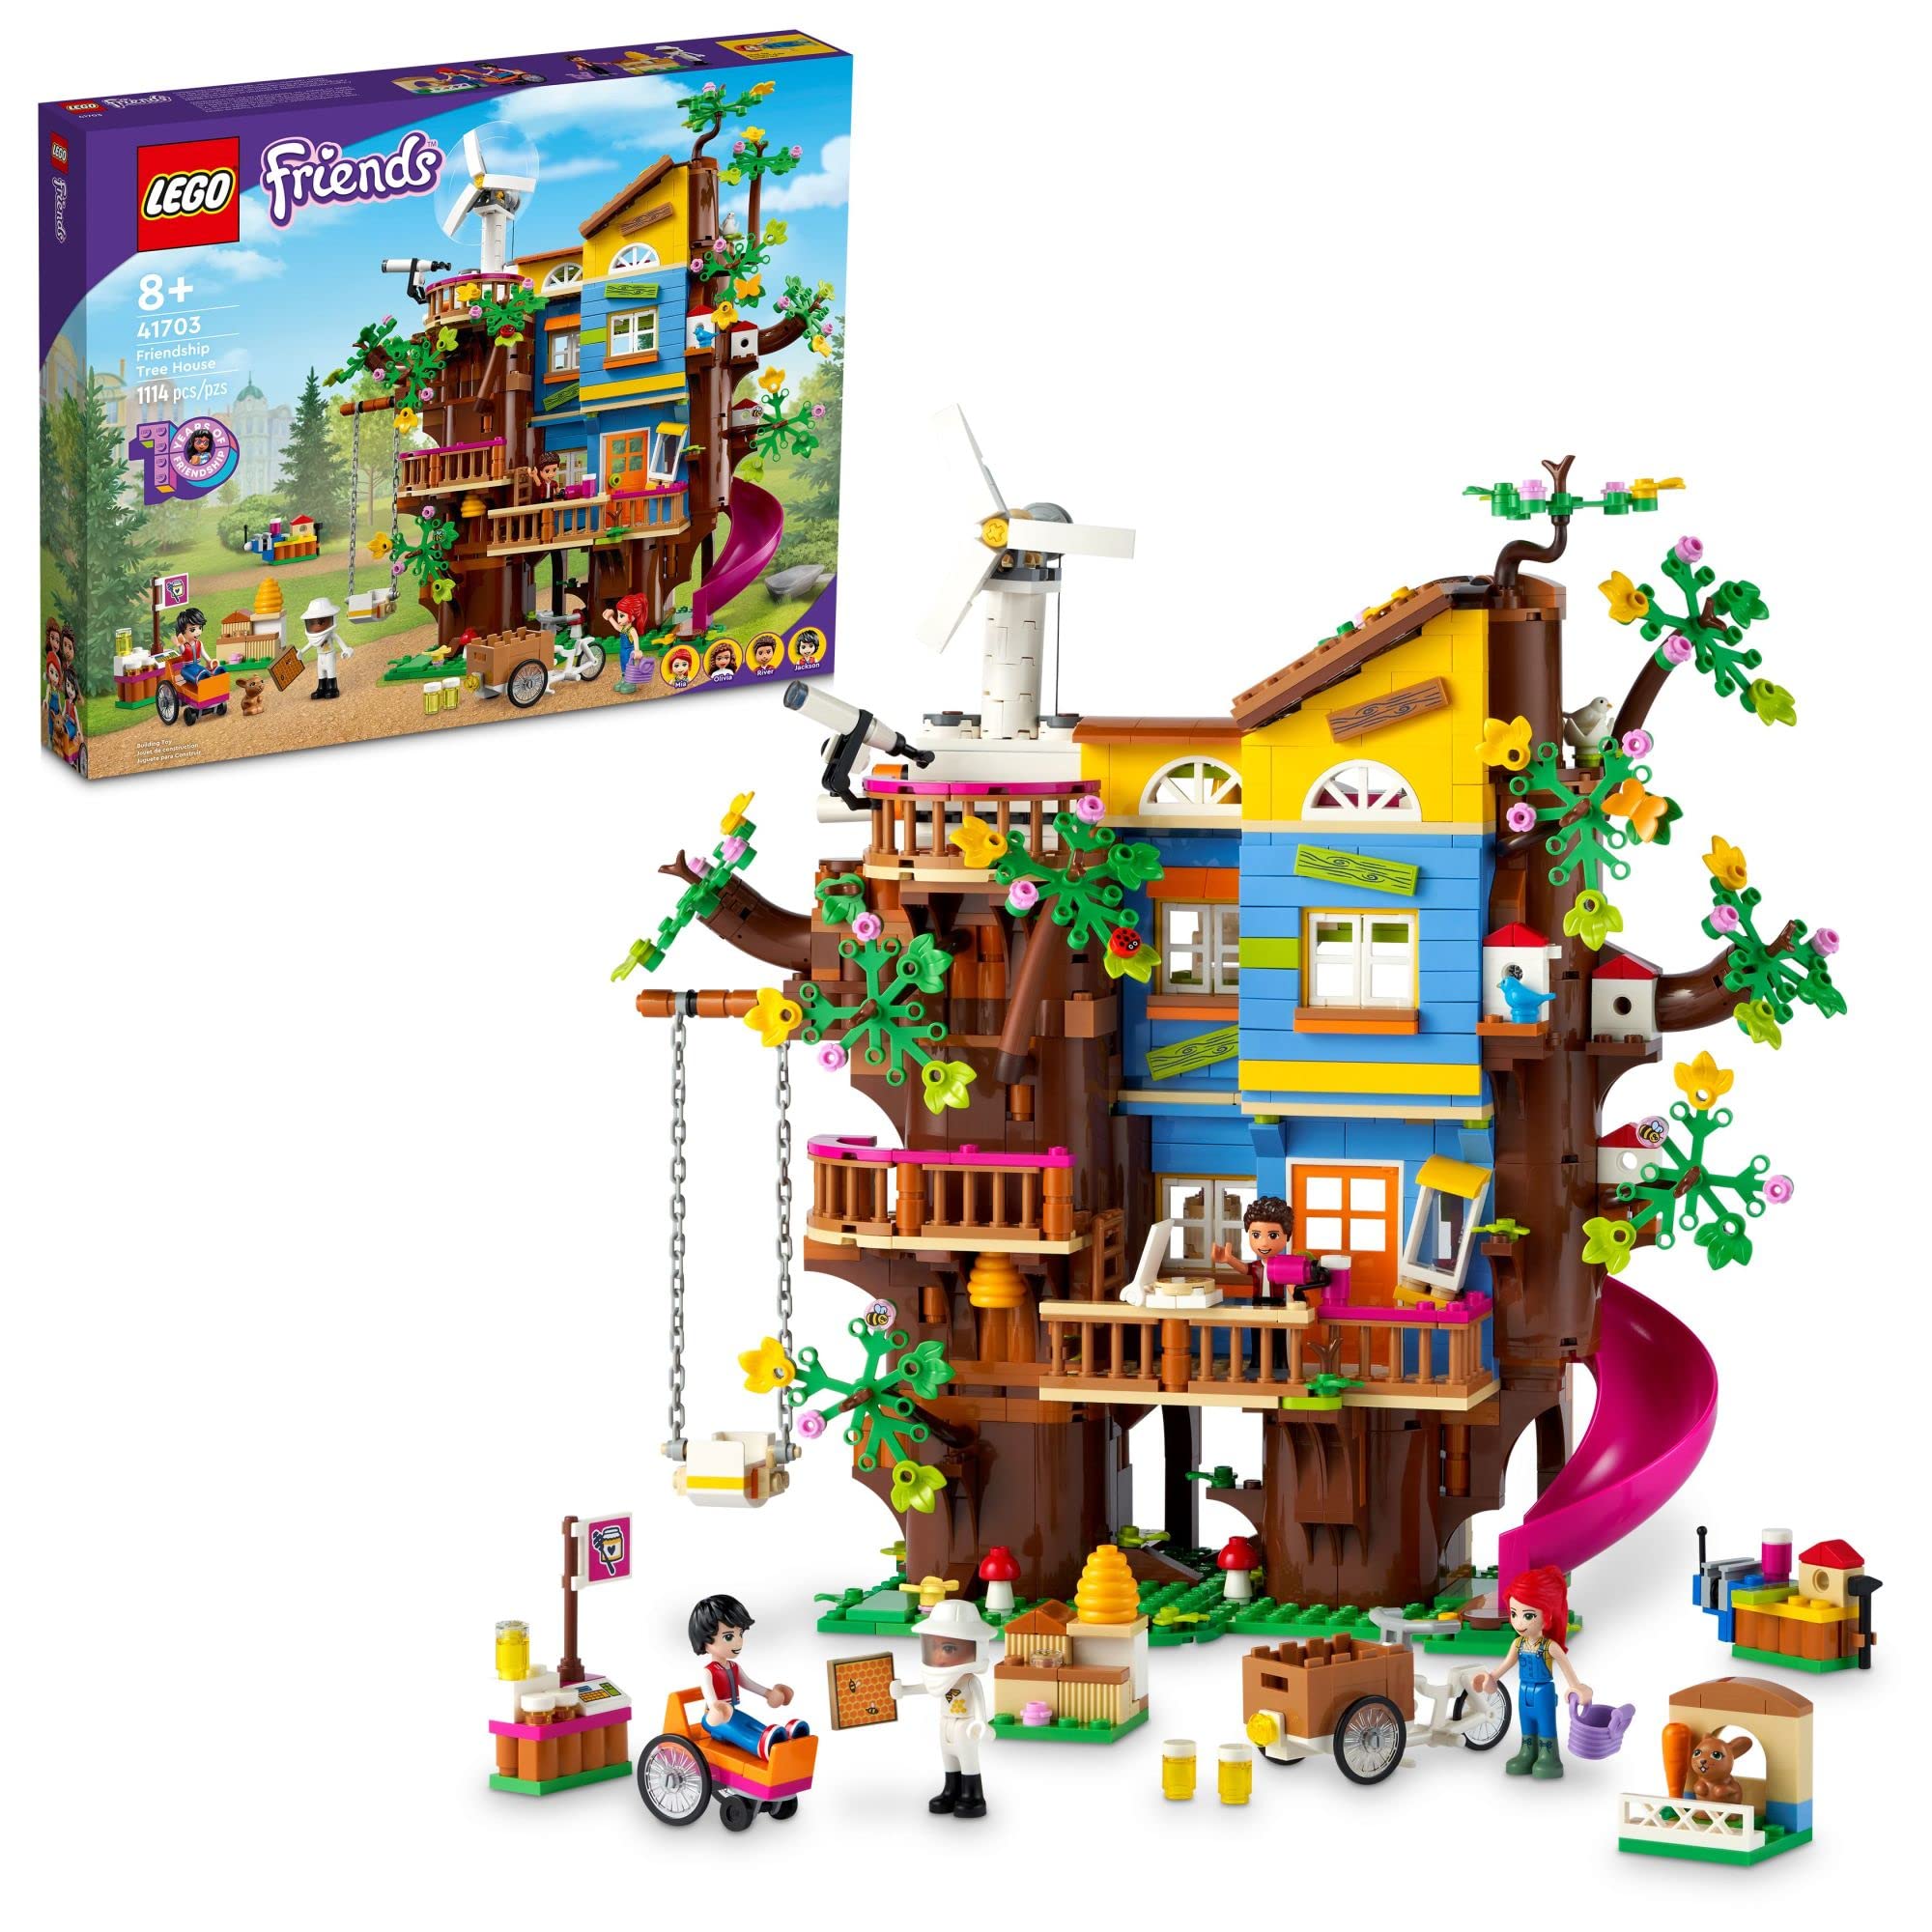 LEGO Friends Friendship Tree House 41703 Building Kit; ...